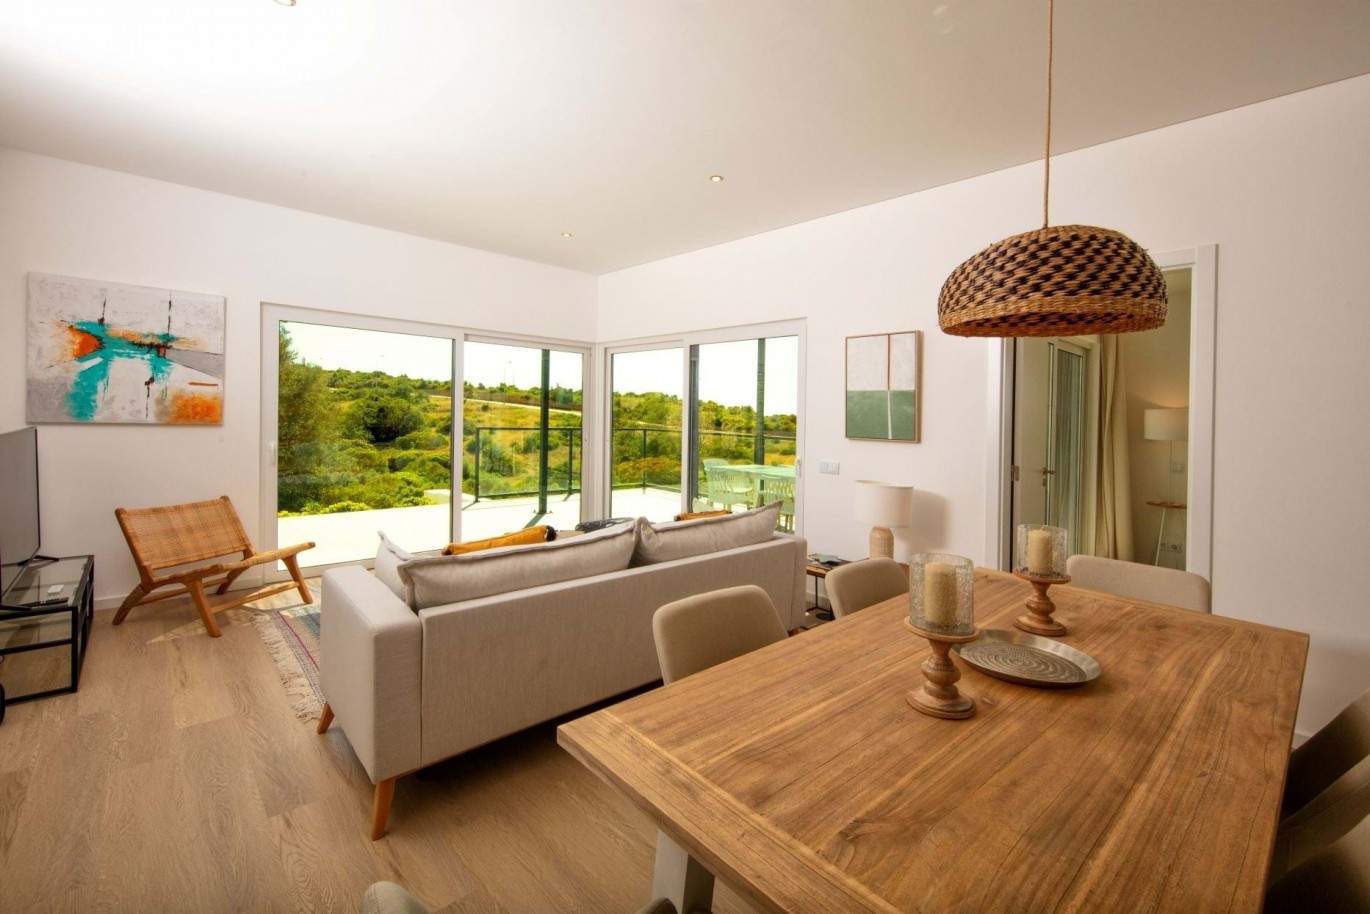 2+1 bedroom villa in resort, for sale in Carvoeiro, Algarve_204834